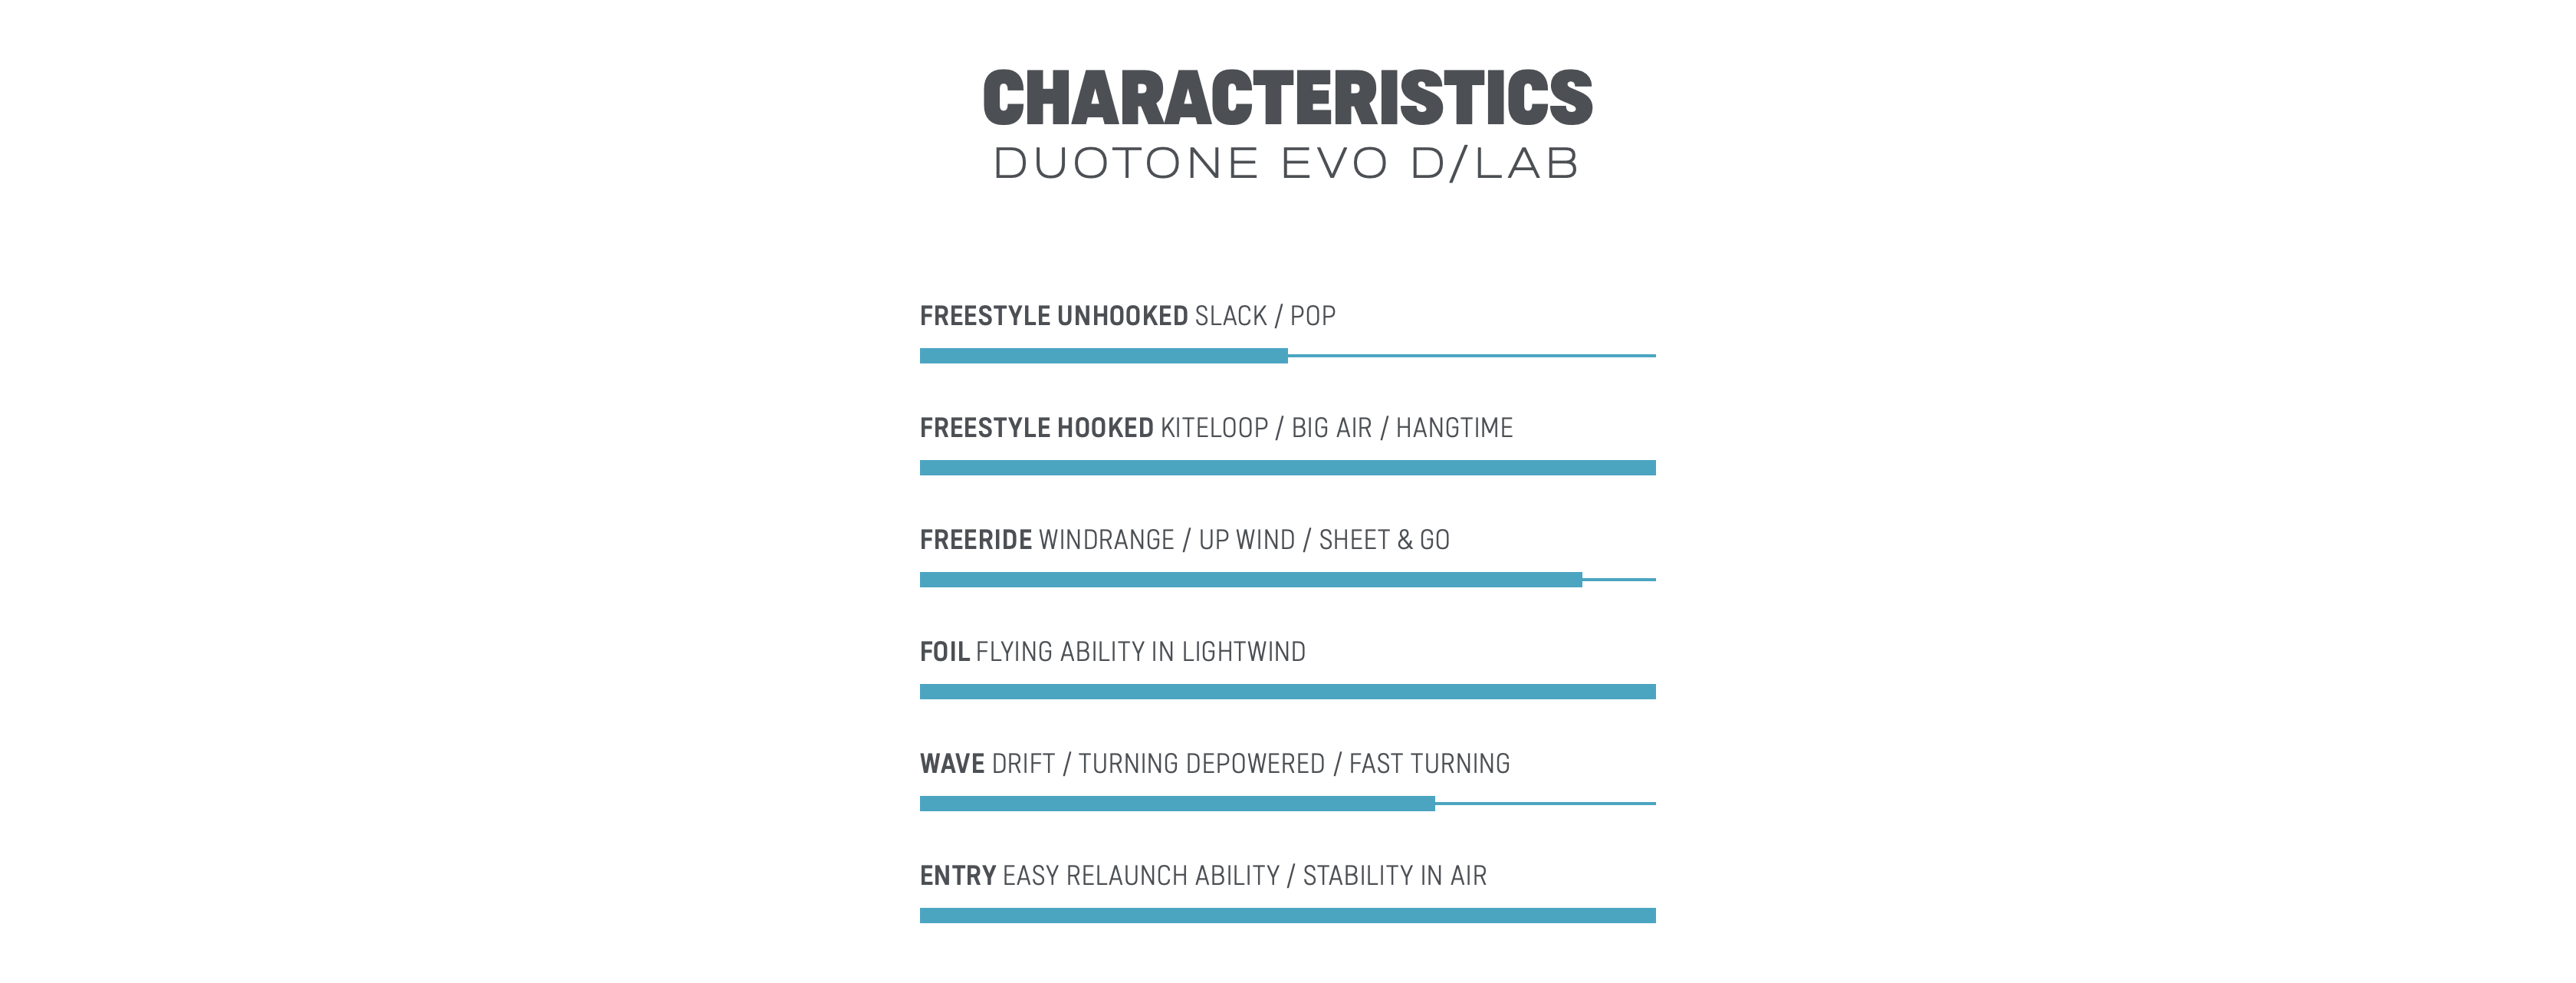 Duotone Evo D/Lab charakterystyka